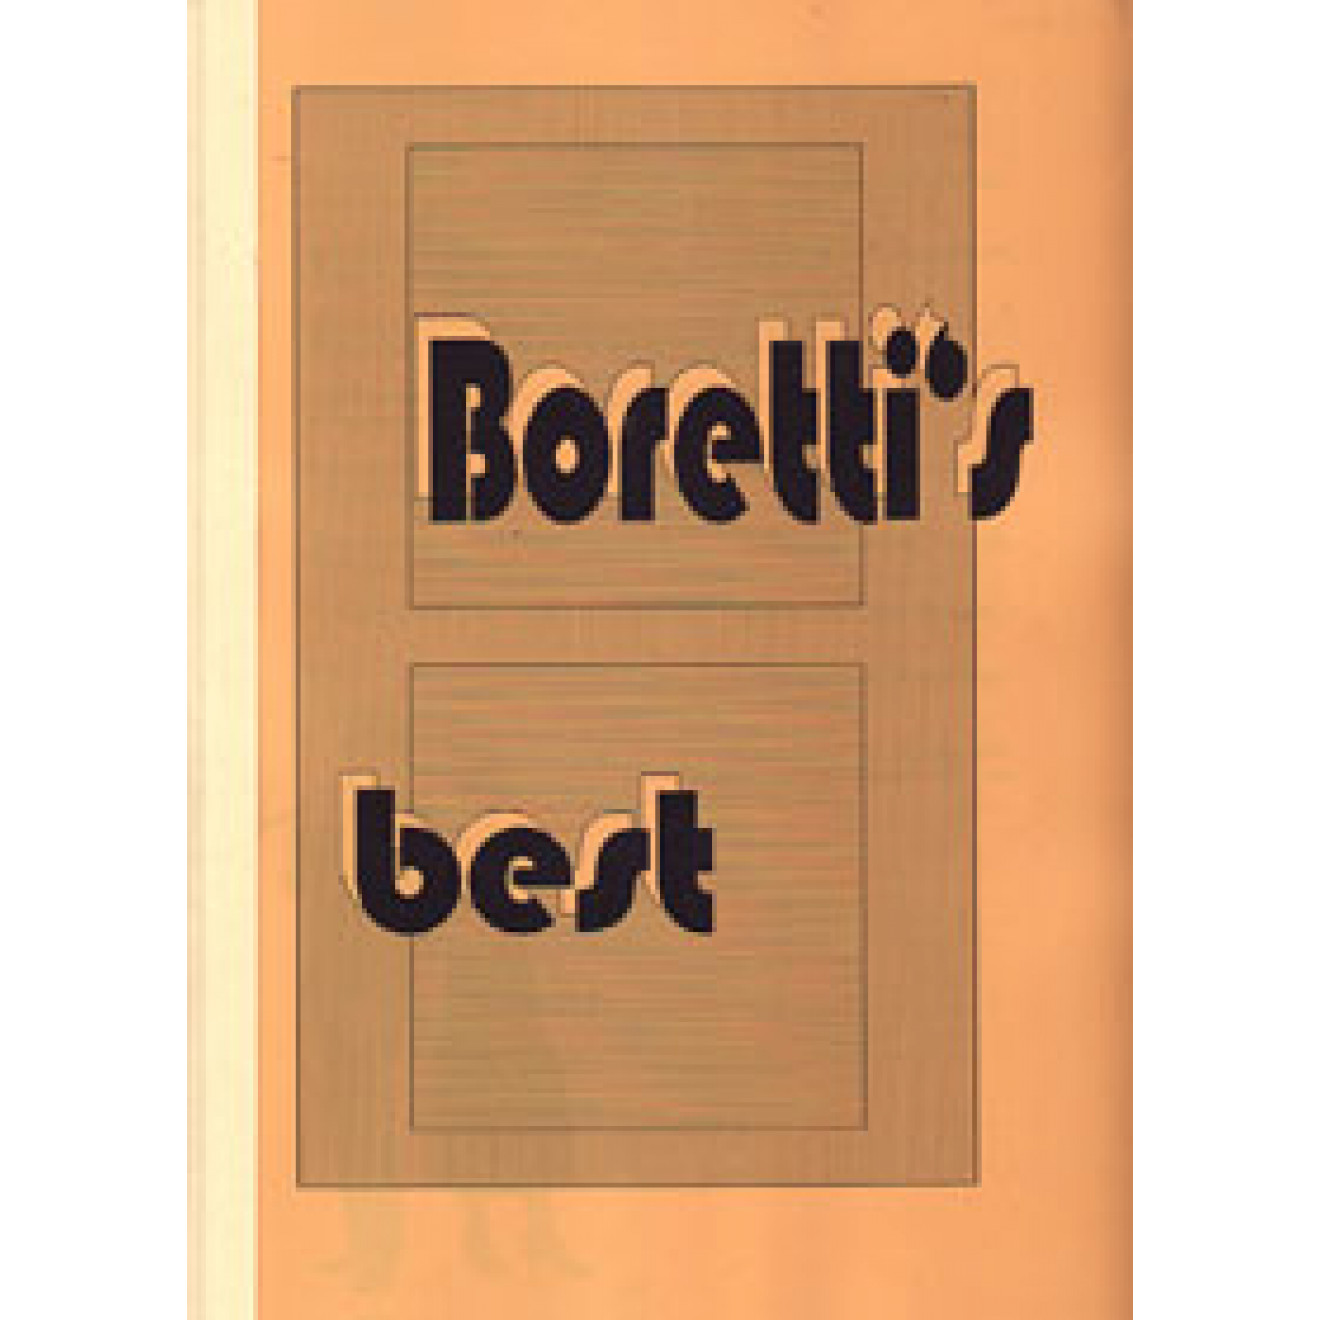 Boretti's best